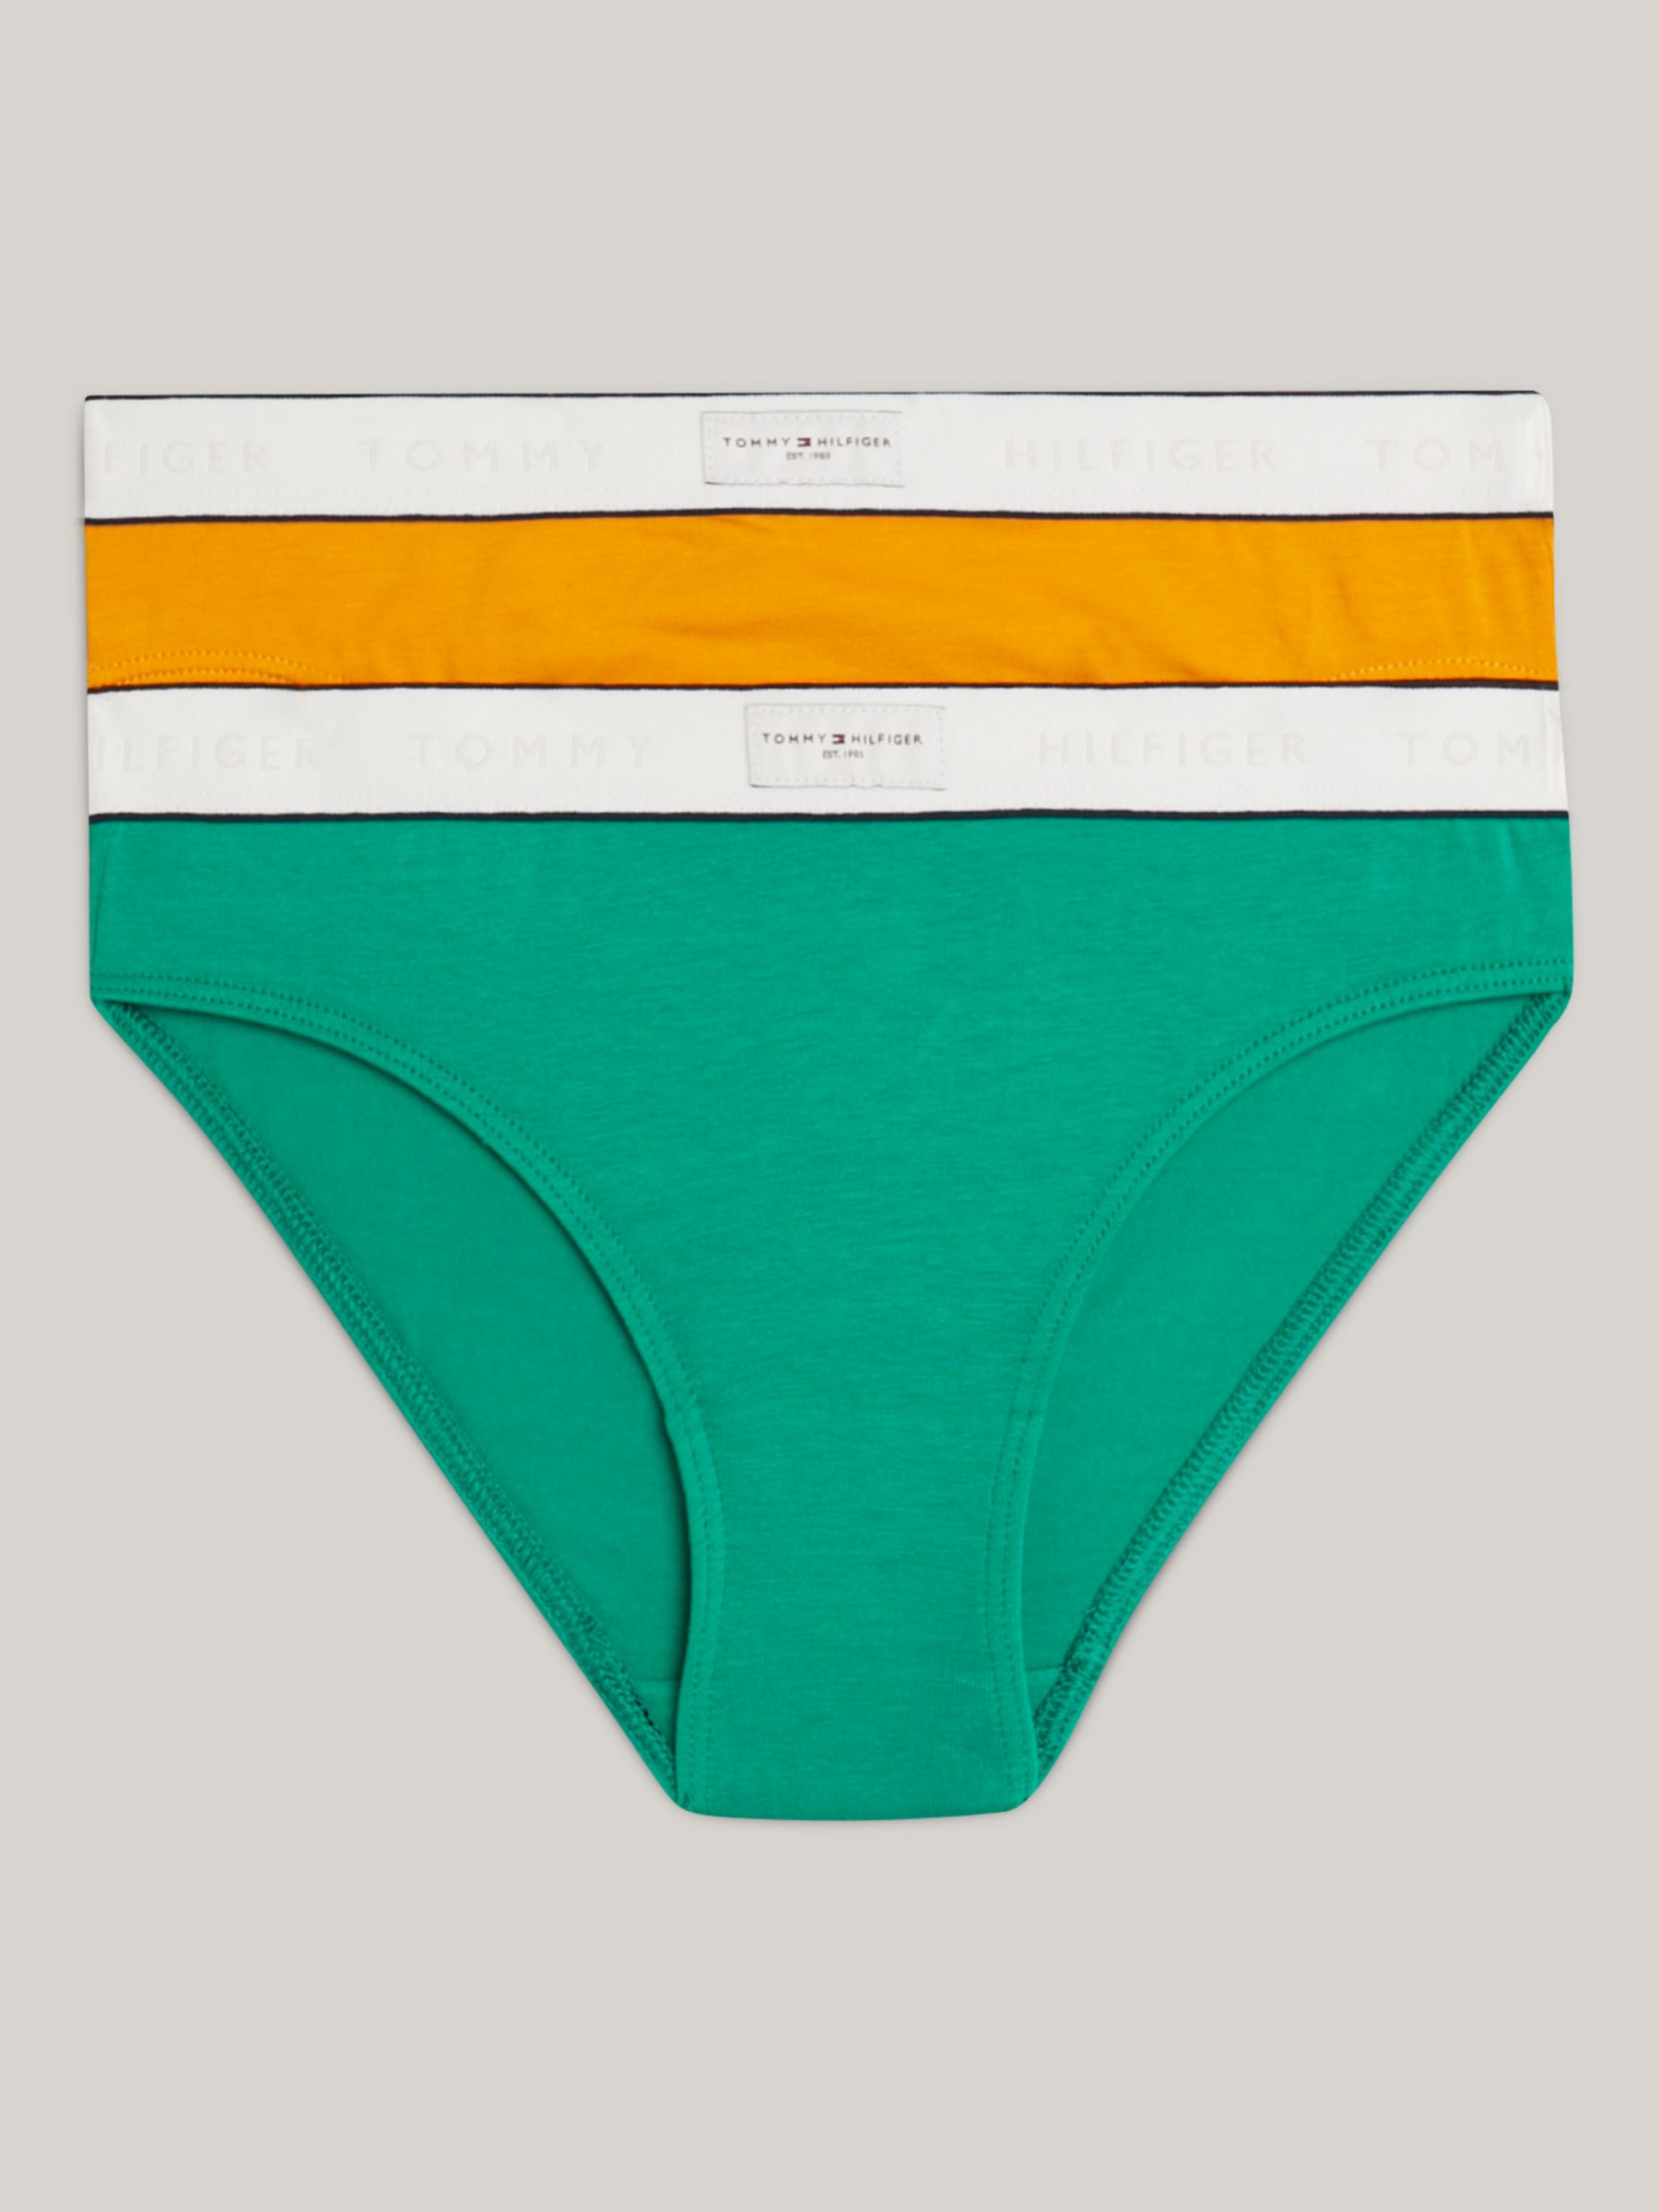 Tommy Hilfiger Underwear Plus size fashion for women, Buy online